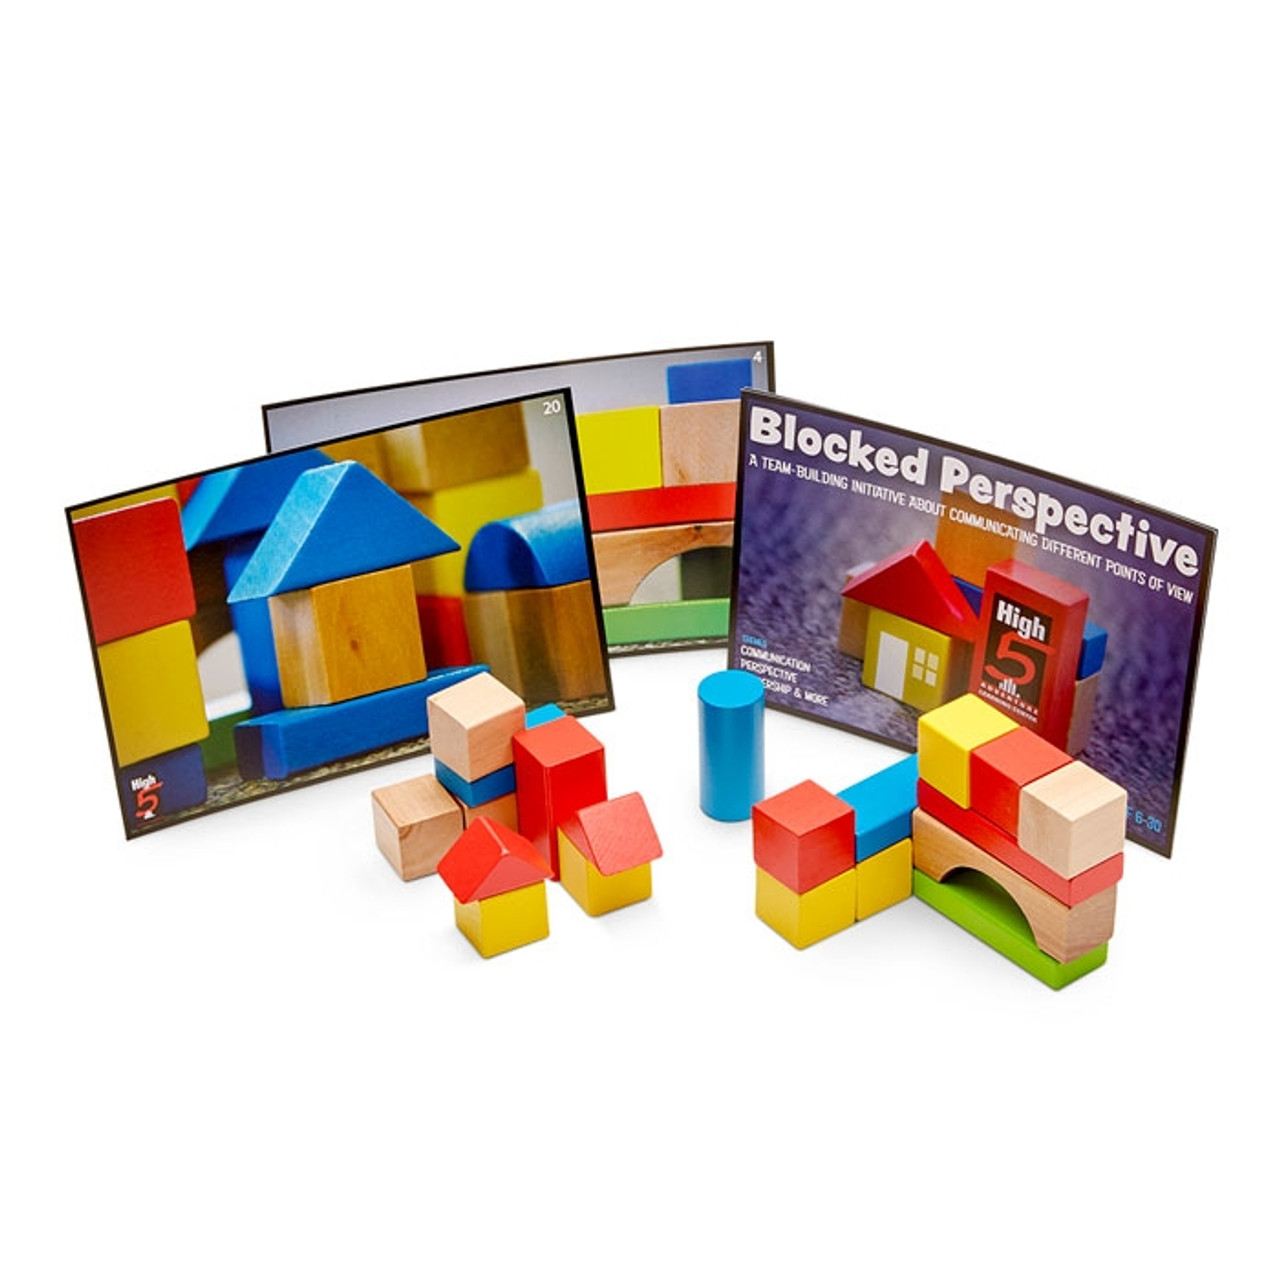 Heiheiup Building Game Building Block Imaginate Kids Structure